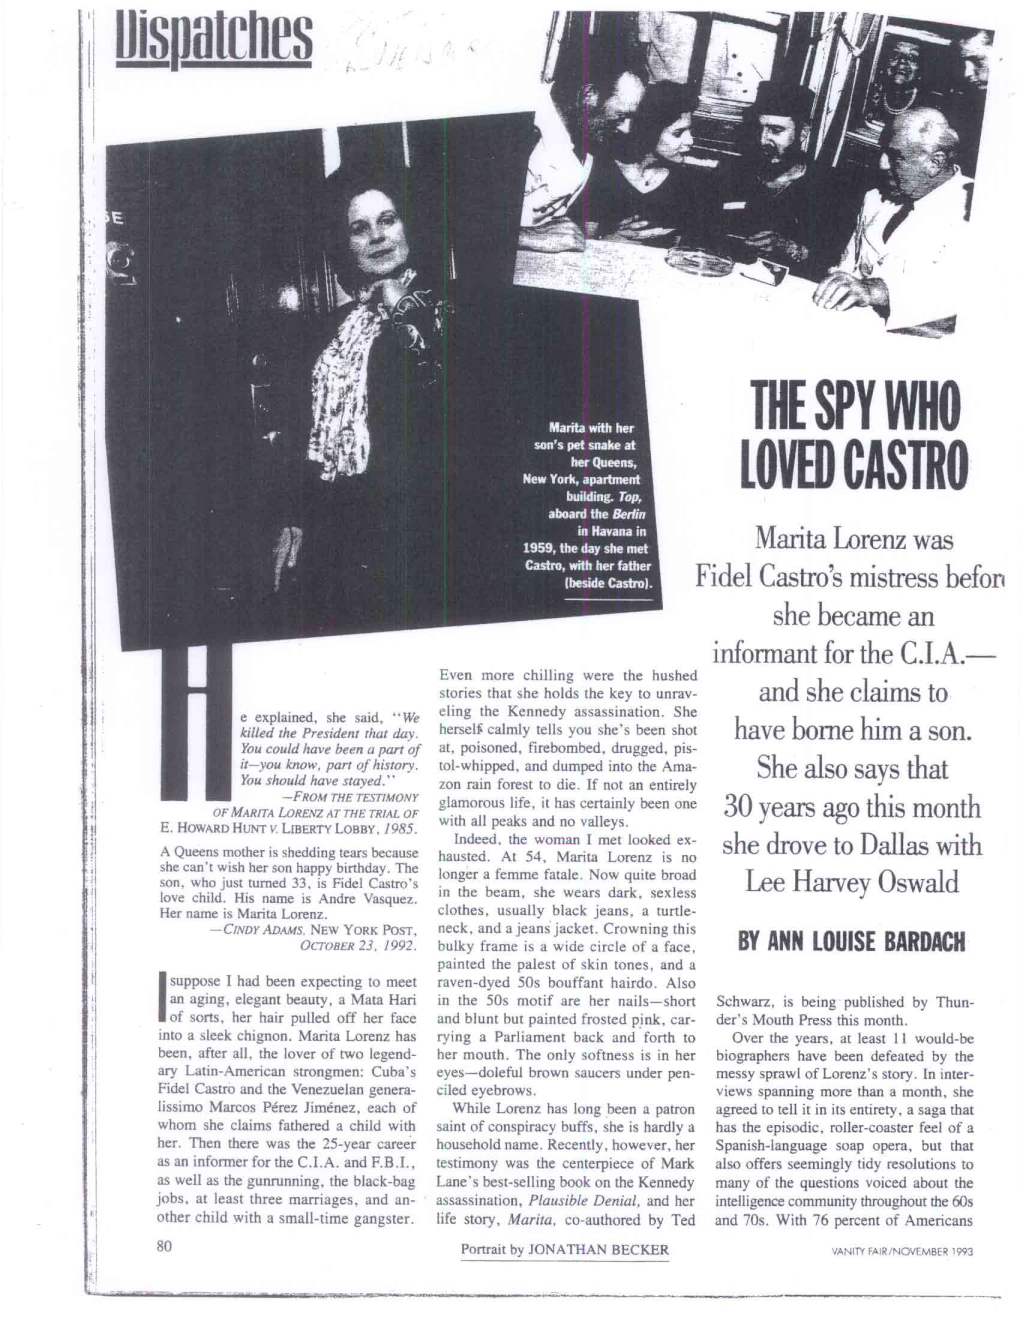 The Spy Who Loved Castro